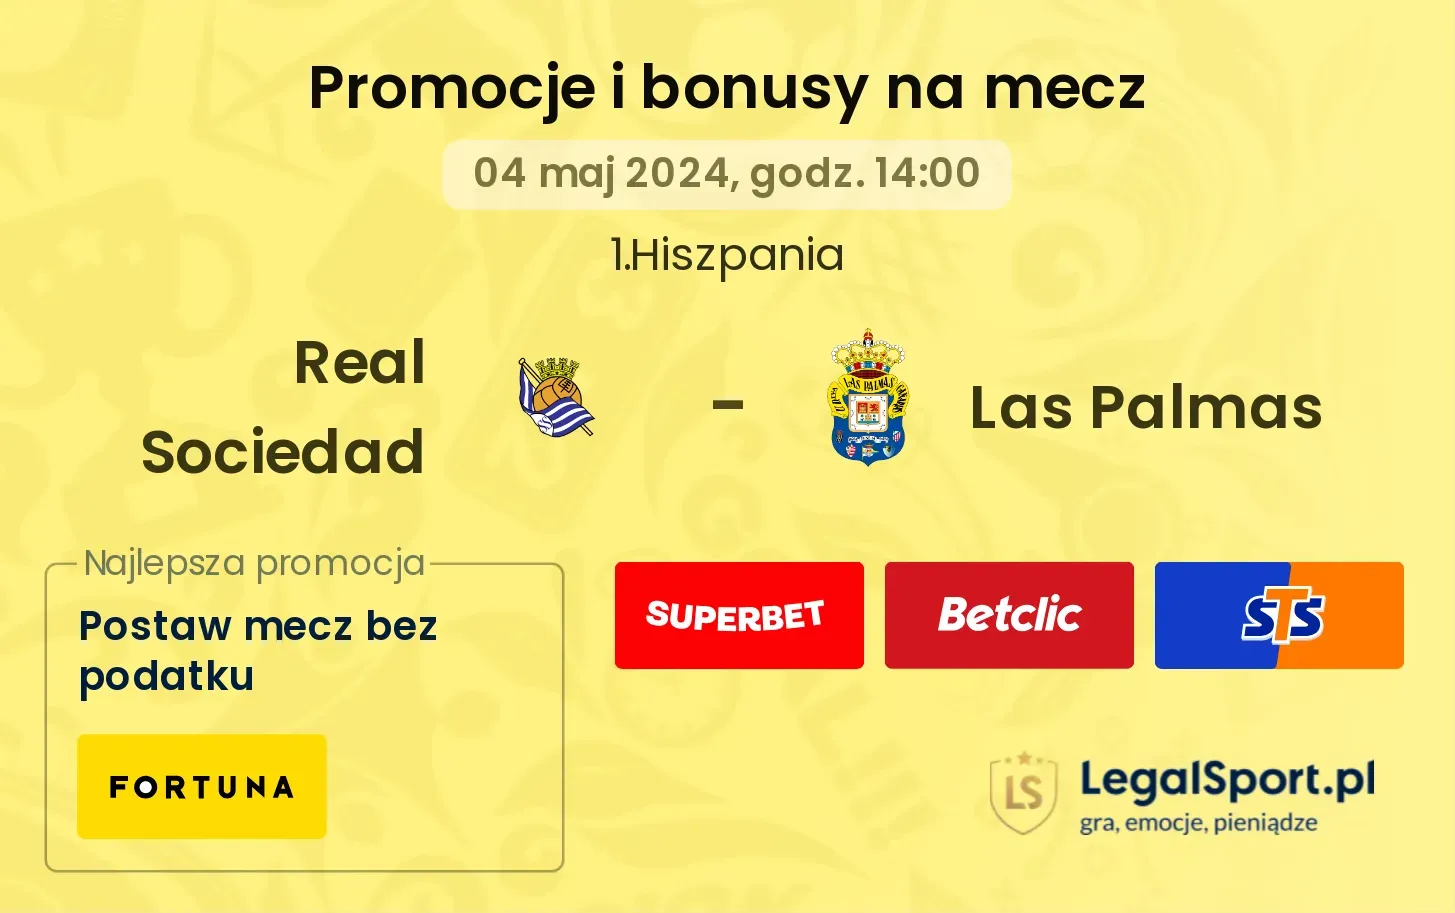 Real Sociedad - Las Palmas promocje bonusy na mecz